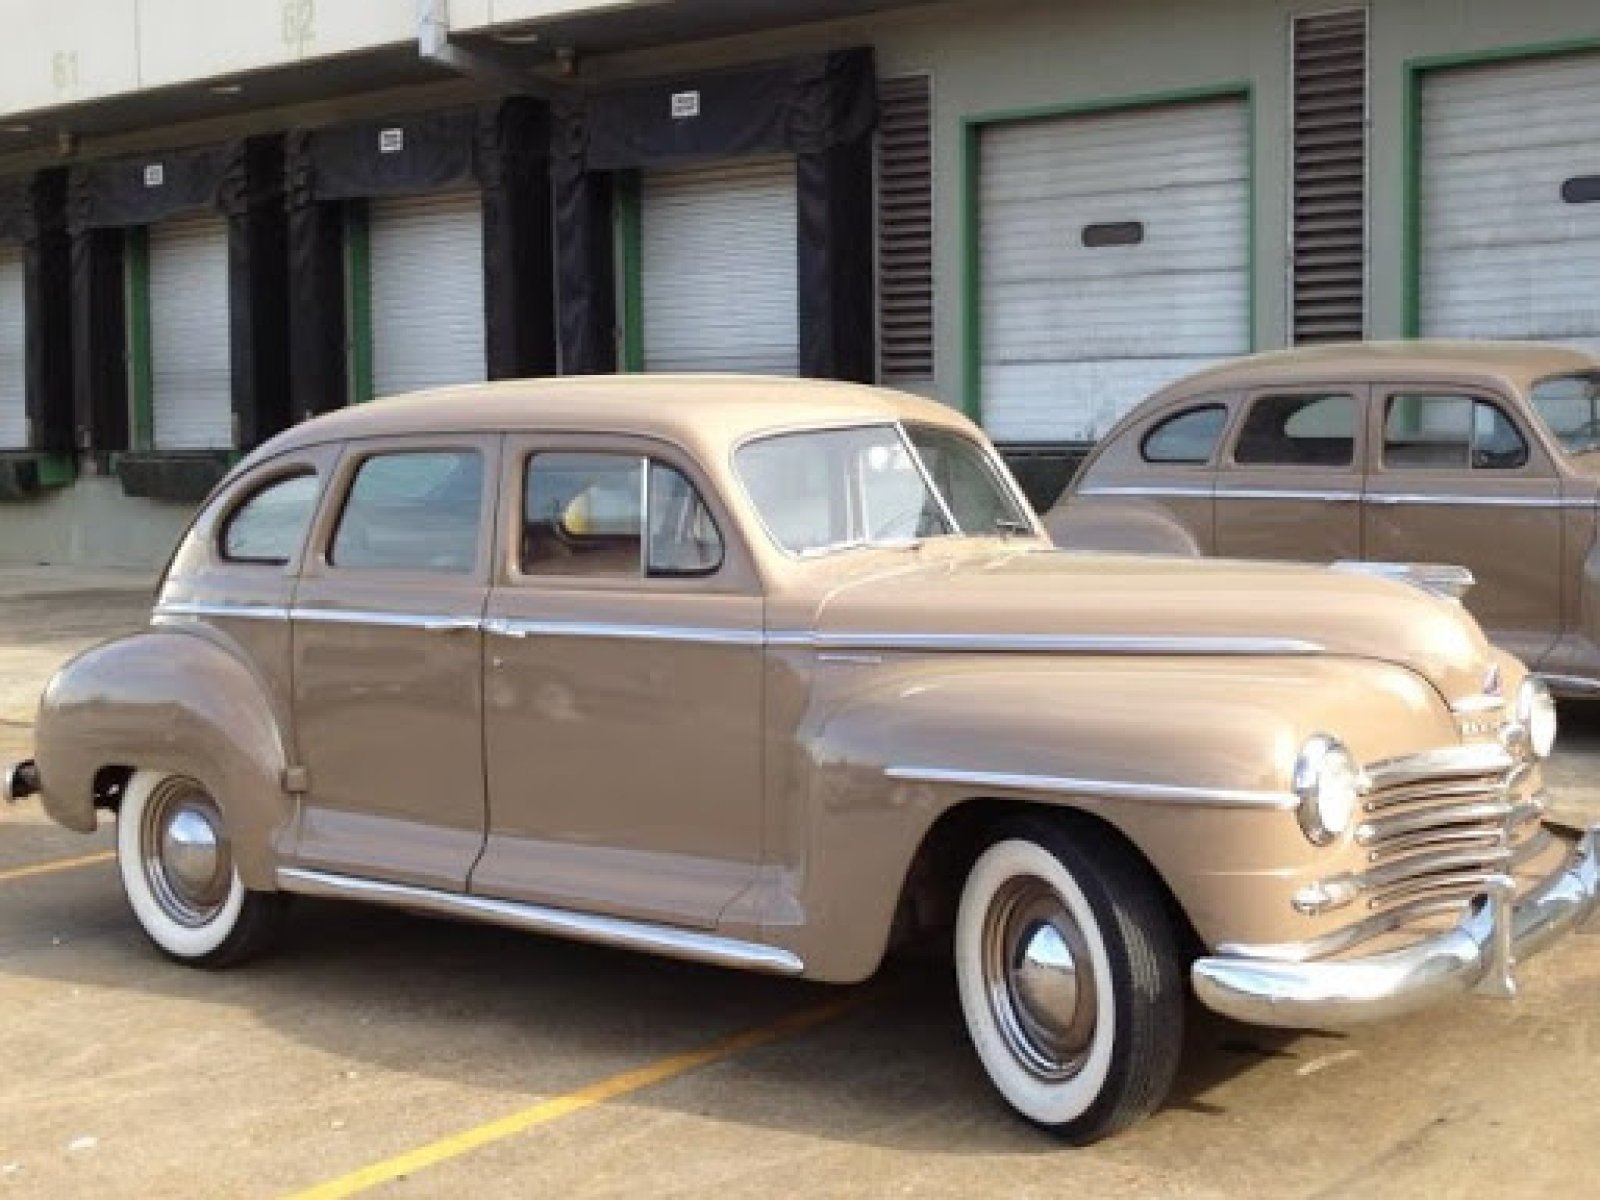 1947 Plymouth Sedan